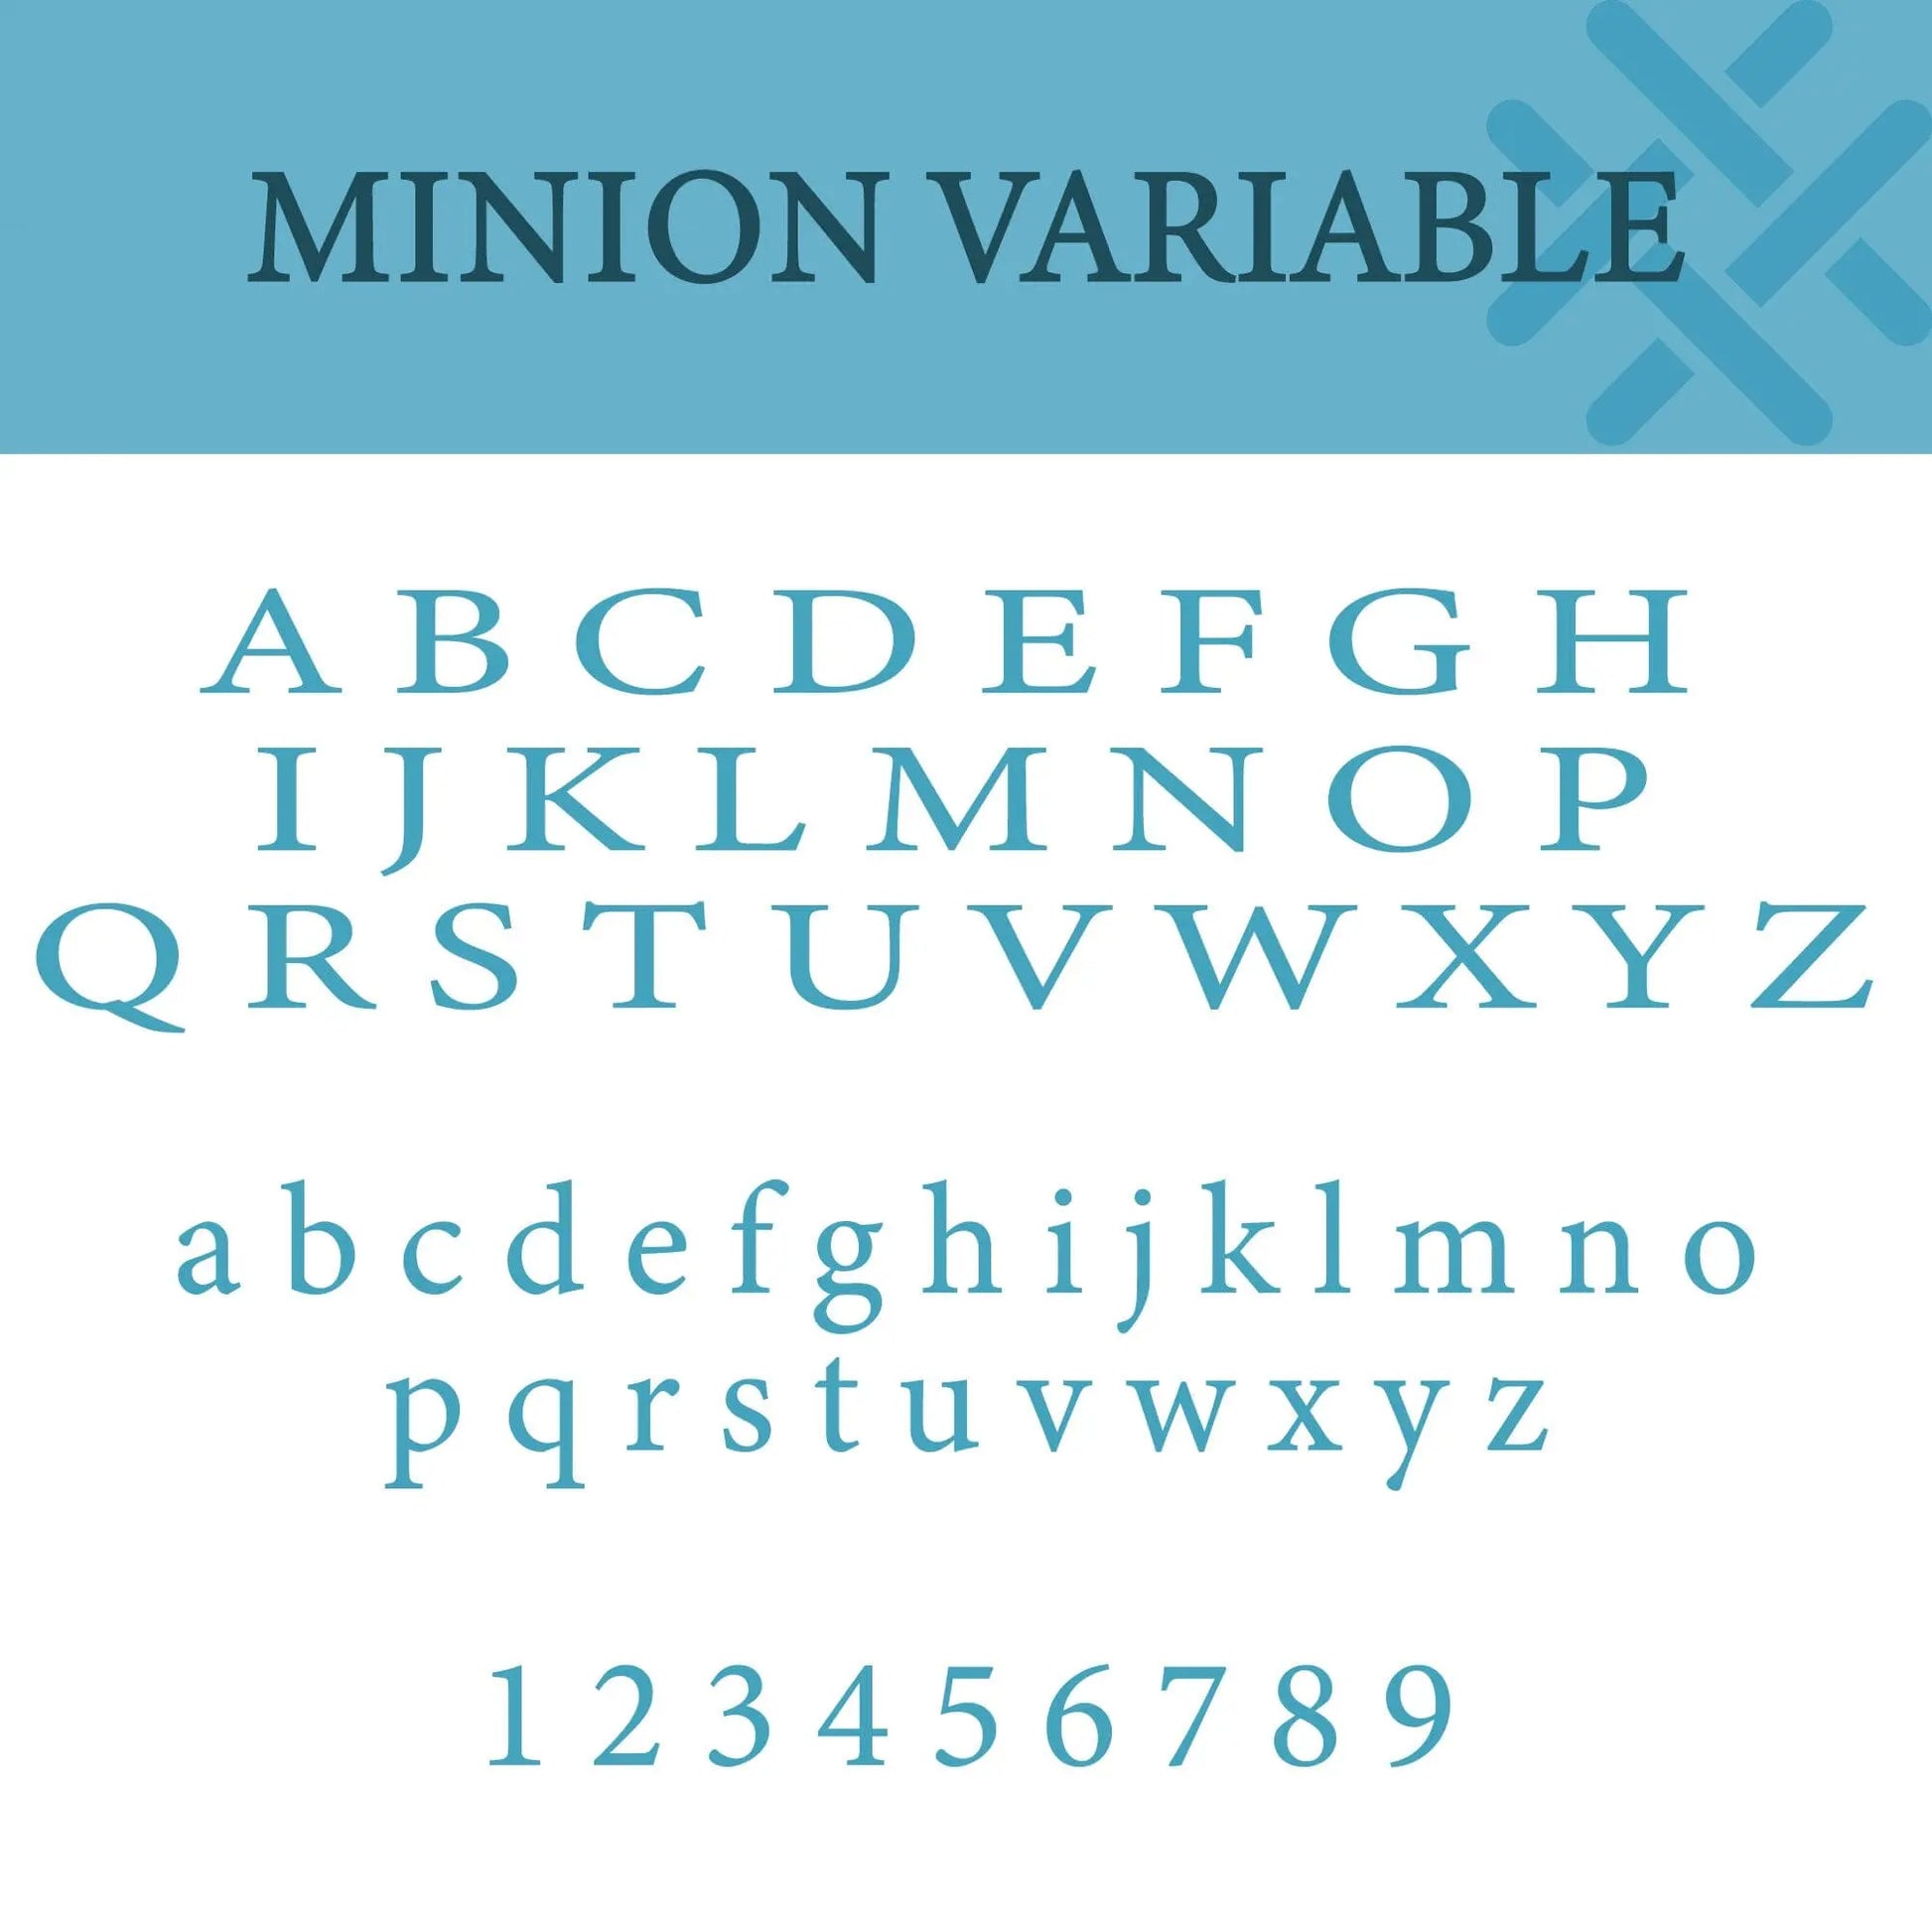 Minion Variable